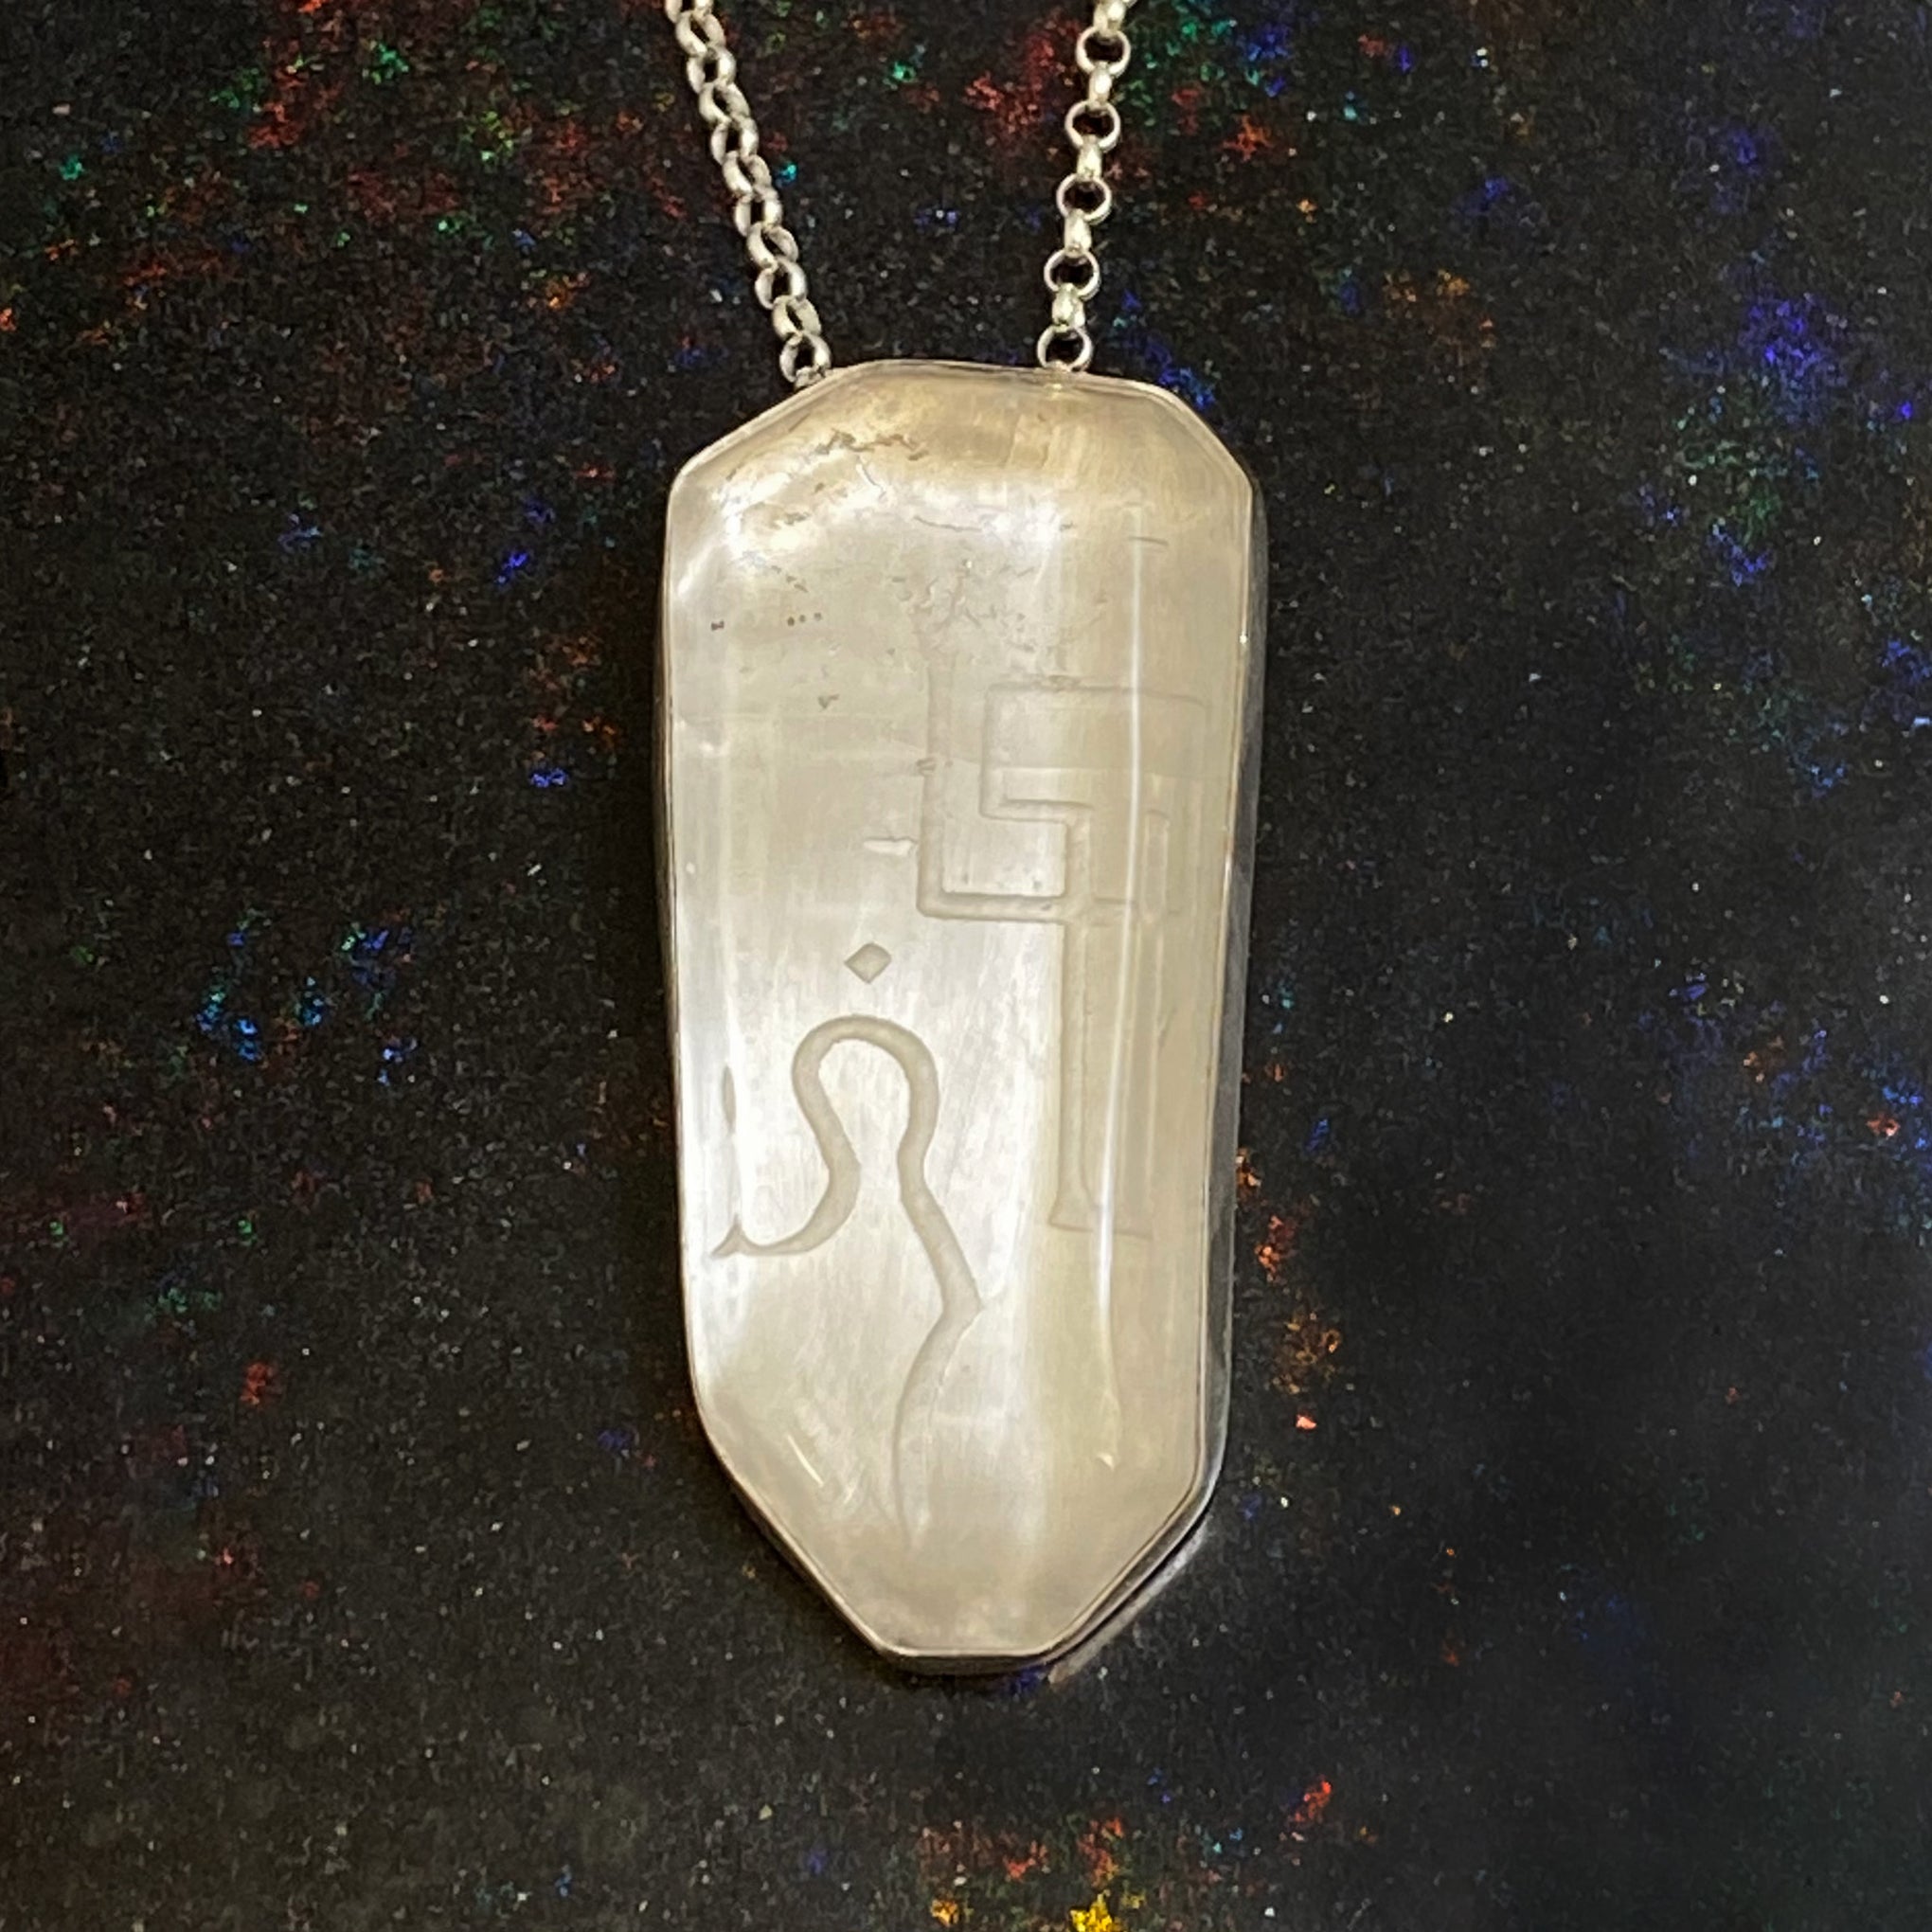 Lemurian Sterling Silver Pendant with Divine Feminine & Sacred Masculine Symbols